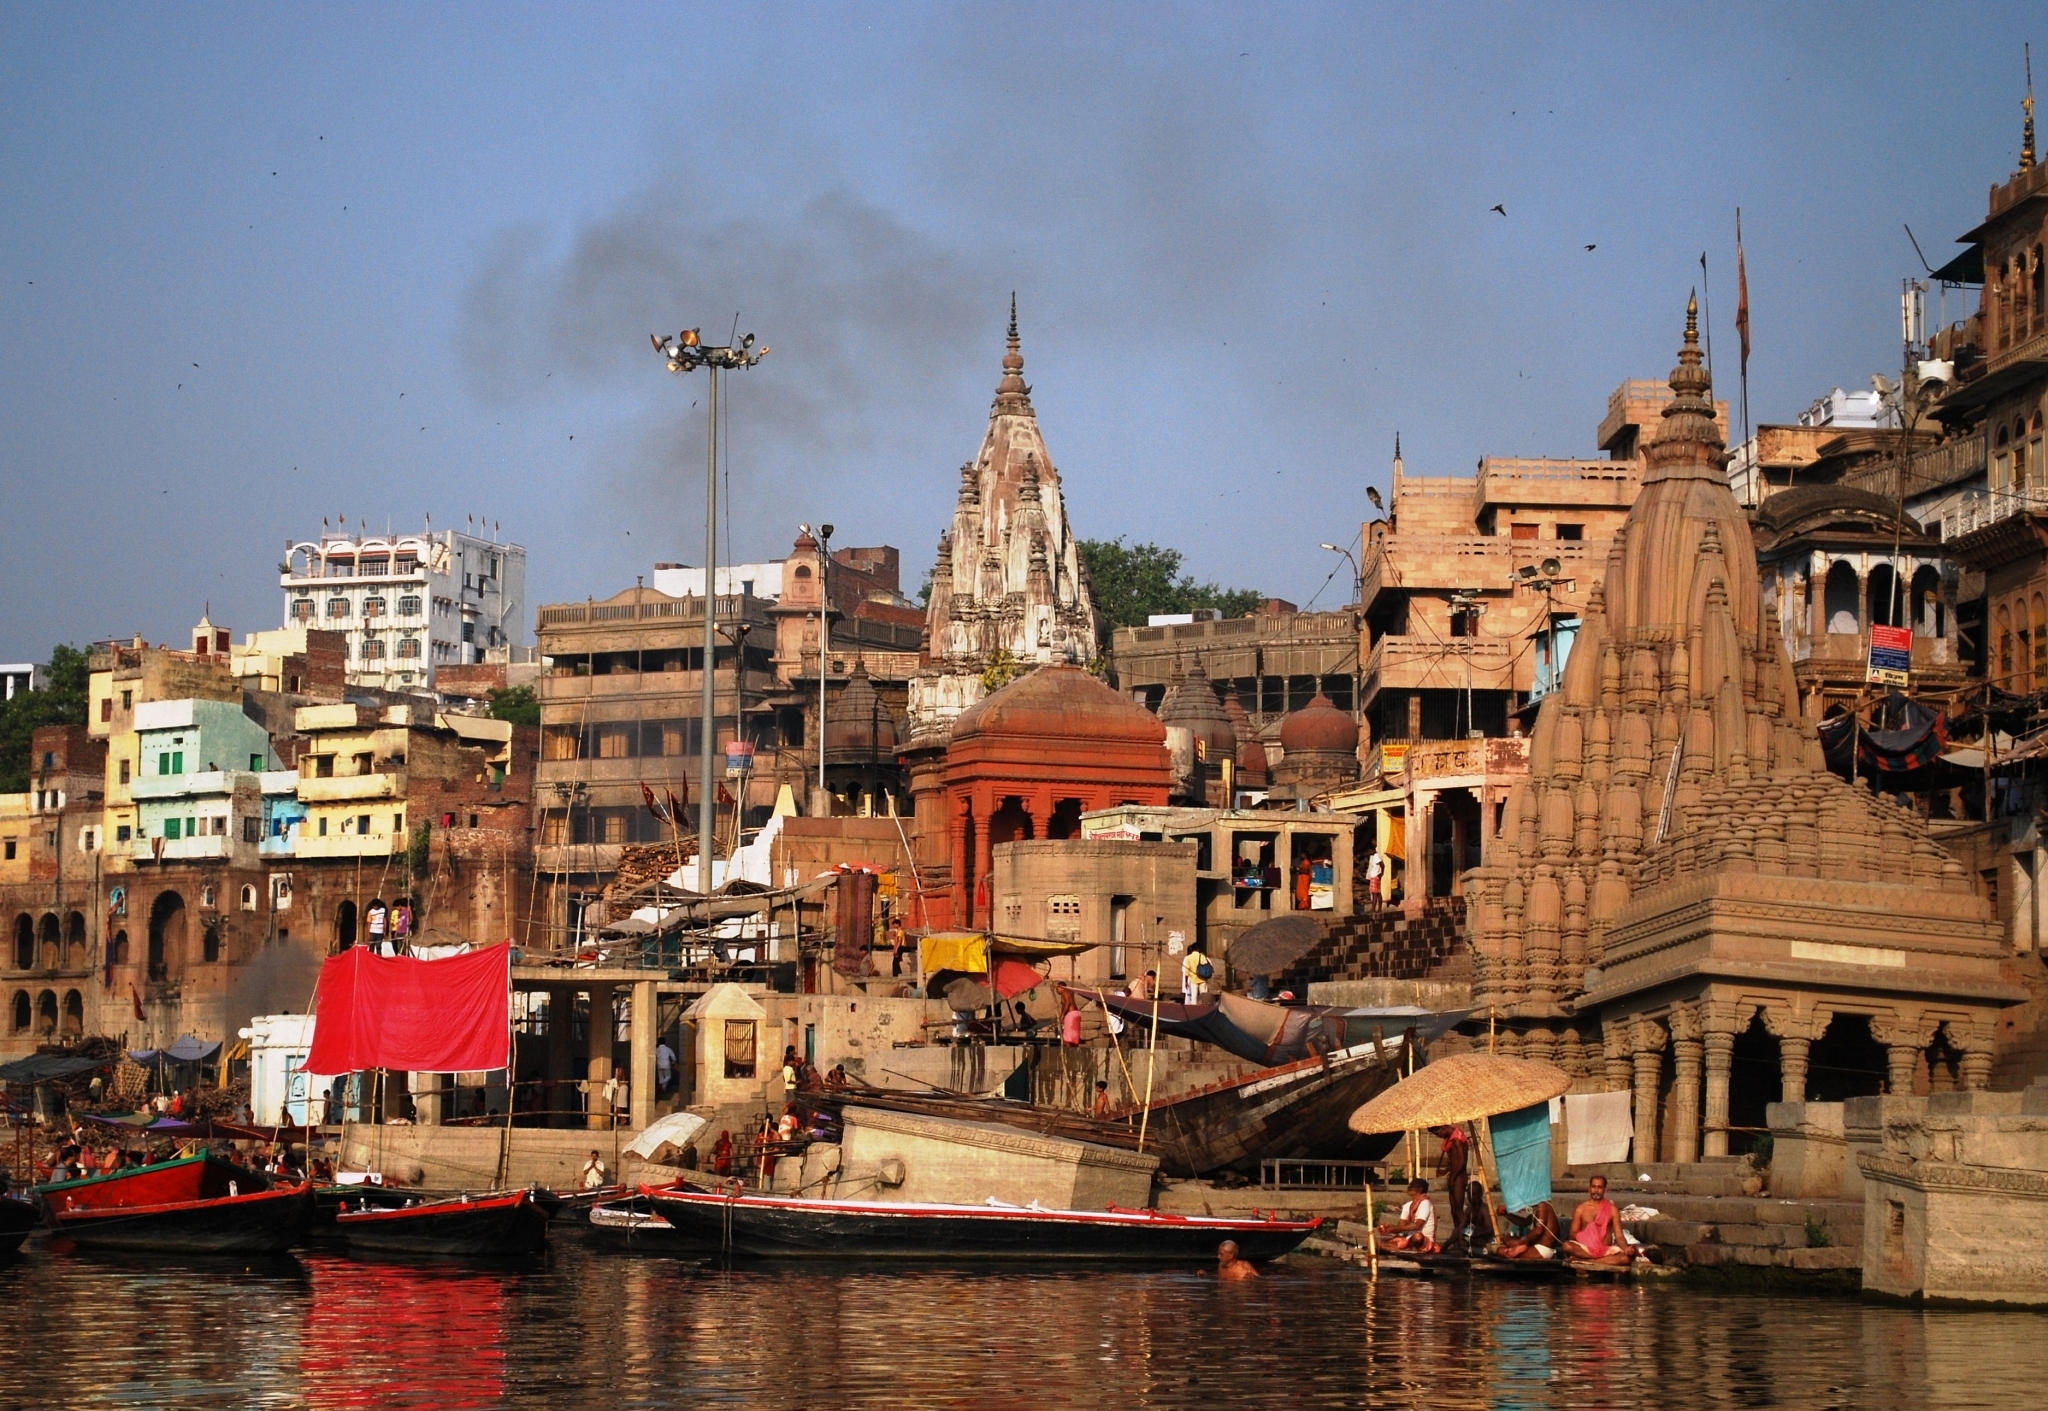 Varanasi (<a href="https://www.flickr.com/photos/muleonor/">paolo mutti</a>/Flicker)